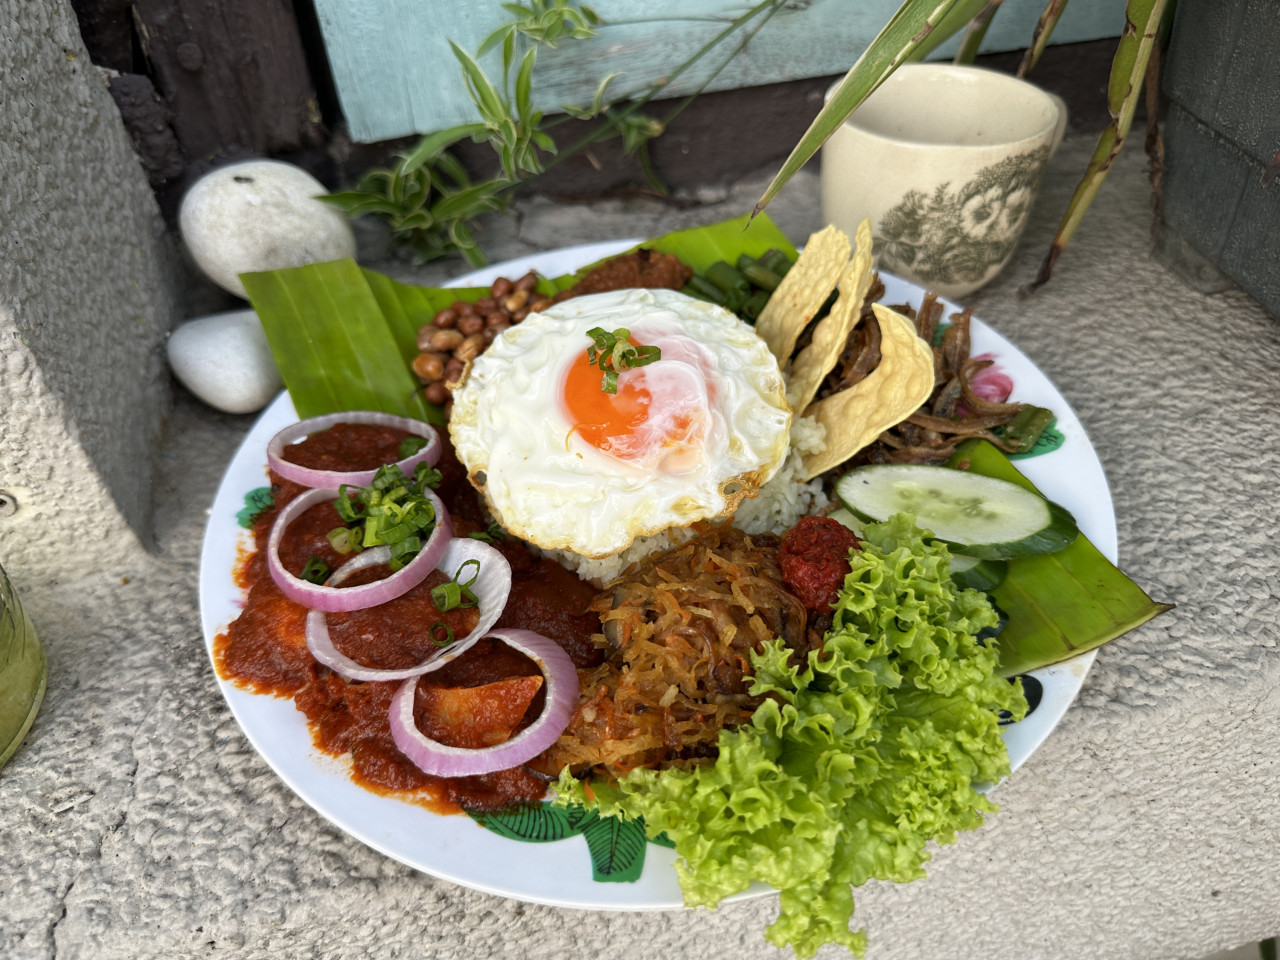 A large serving of the nasi lemak at Rasa Rasa. – Haikal Fernandez pic